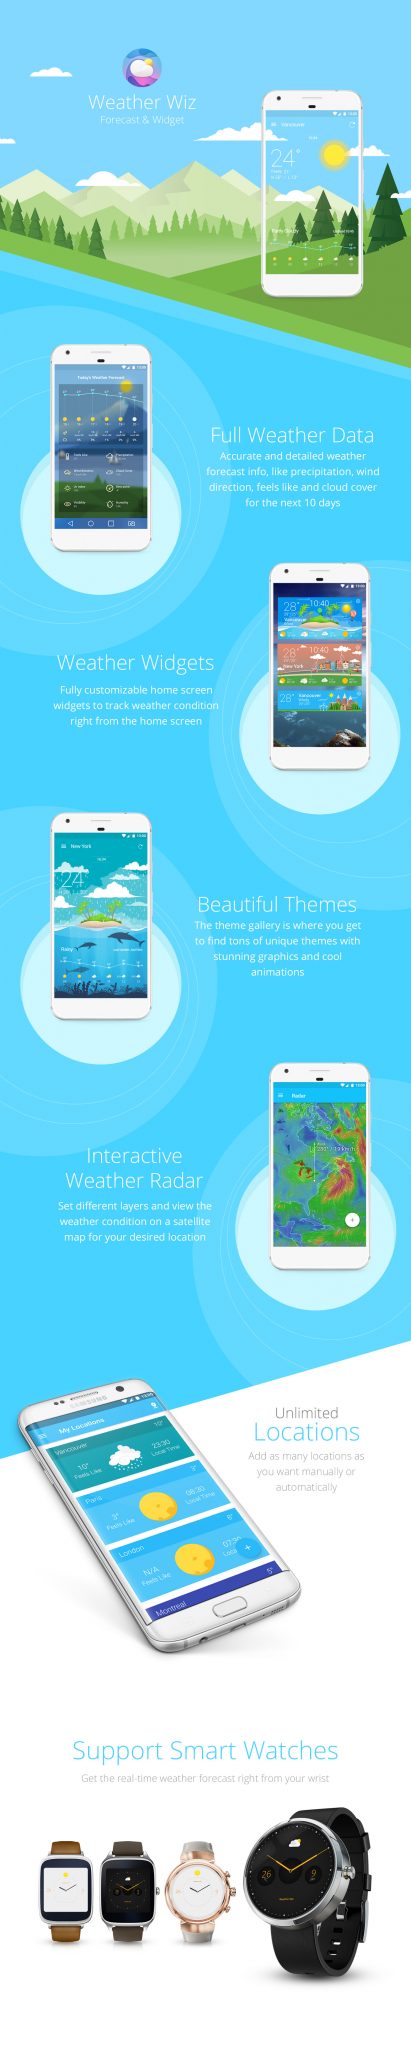 Weather Wiz Mobile App UI Design